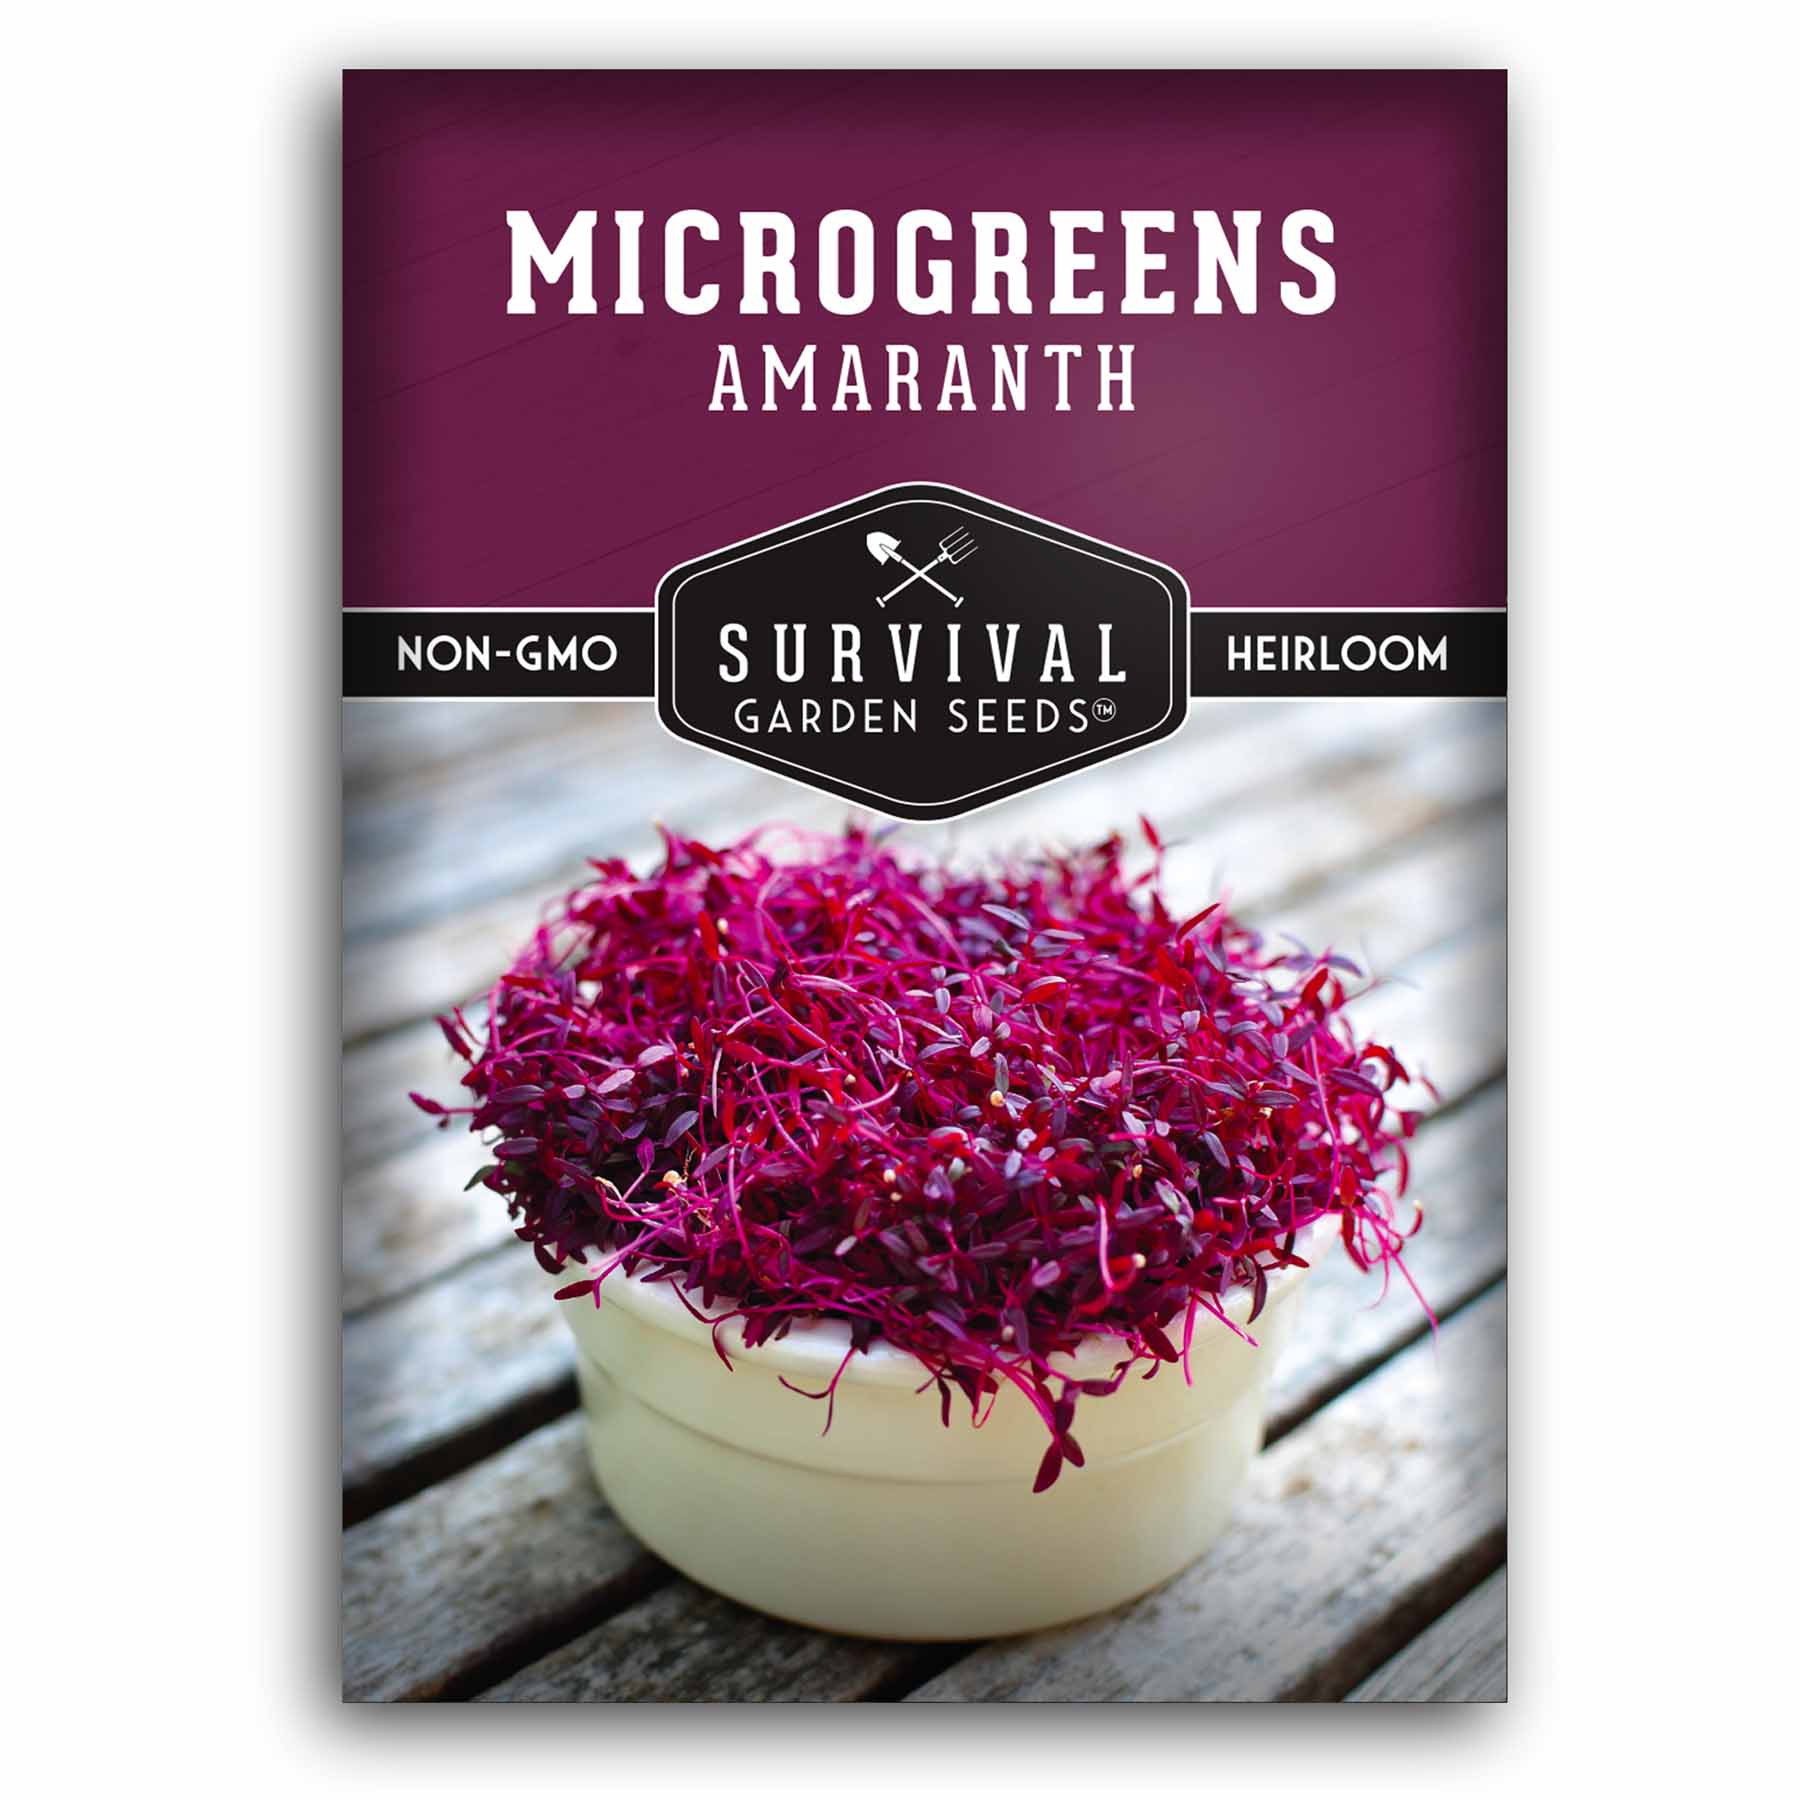 1 packet of Amaranth Microgreens seeds